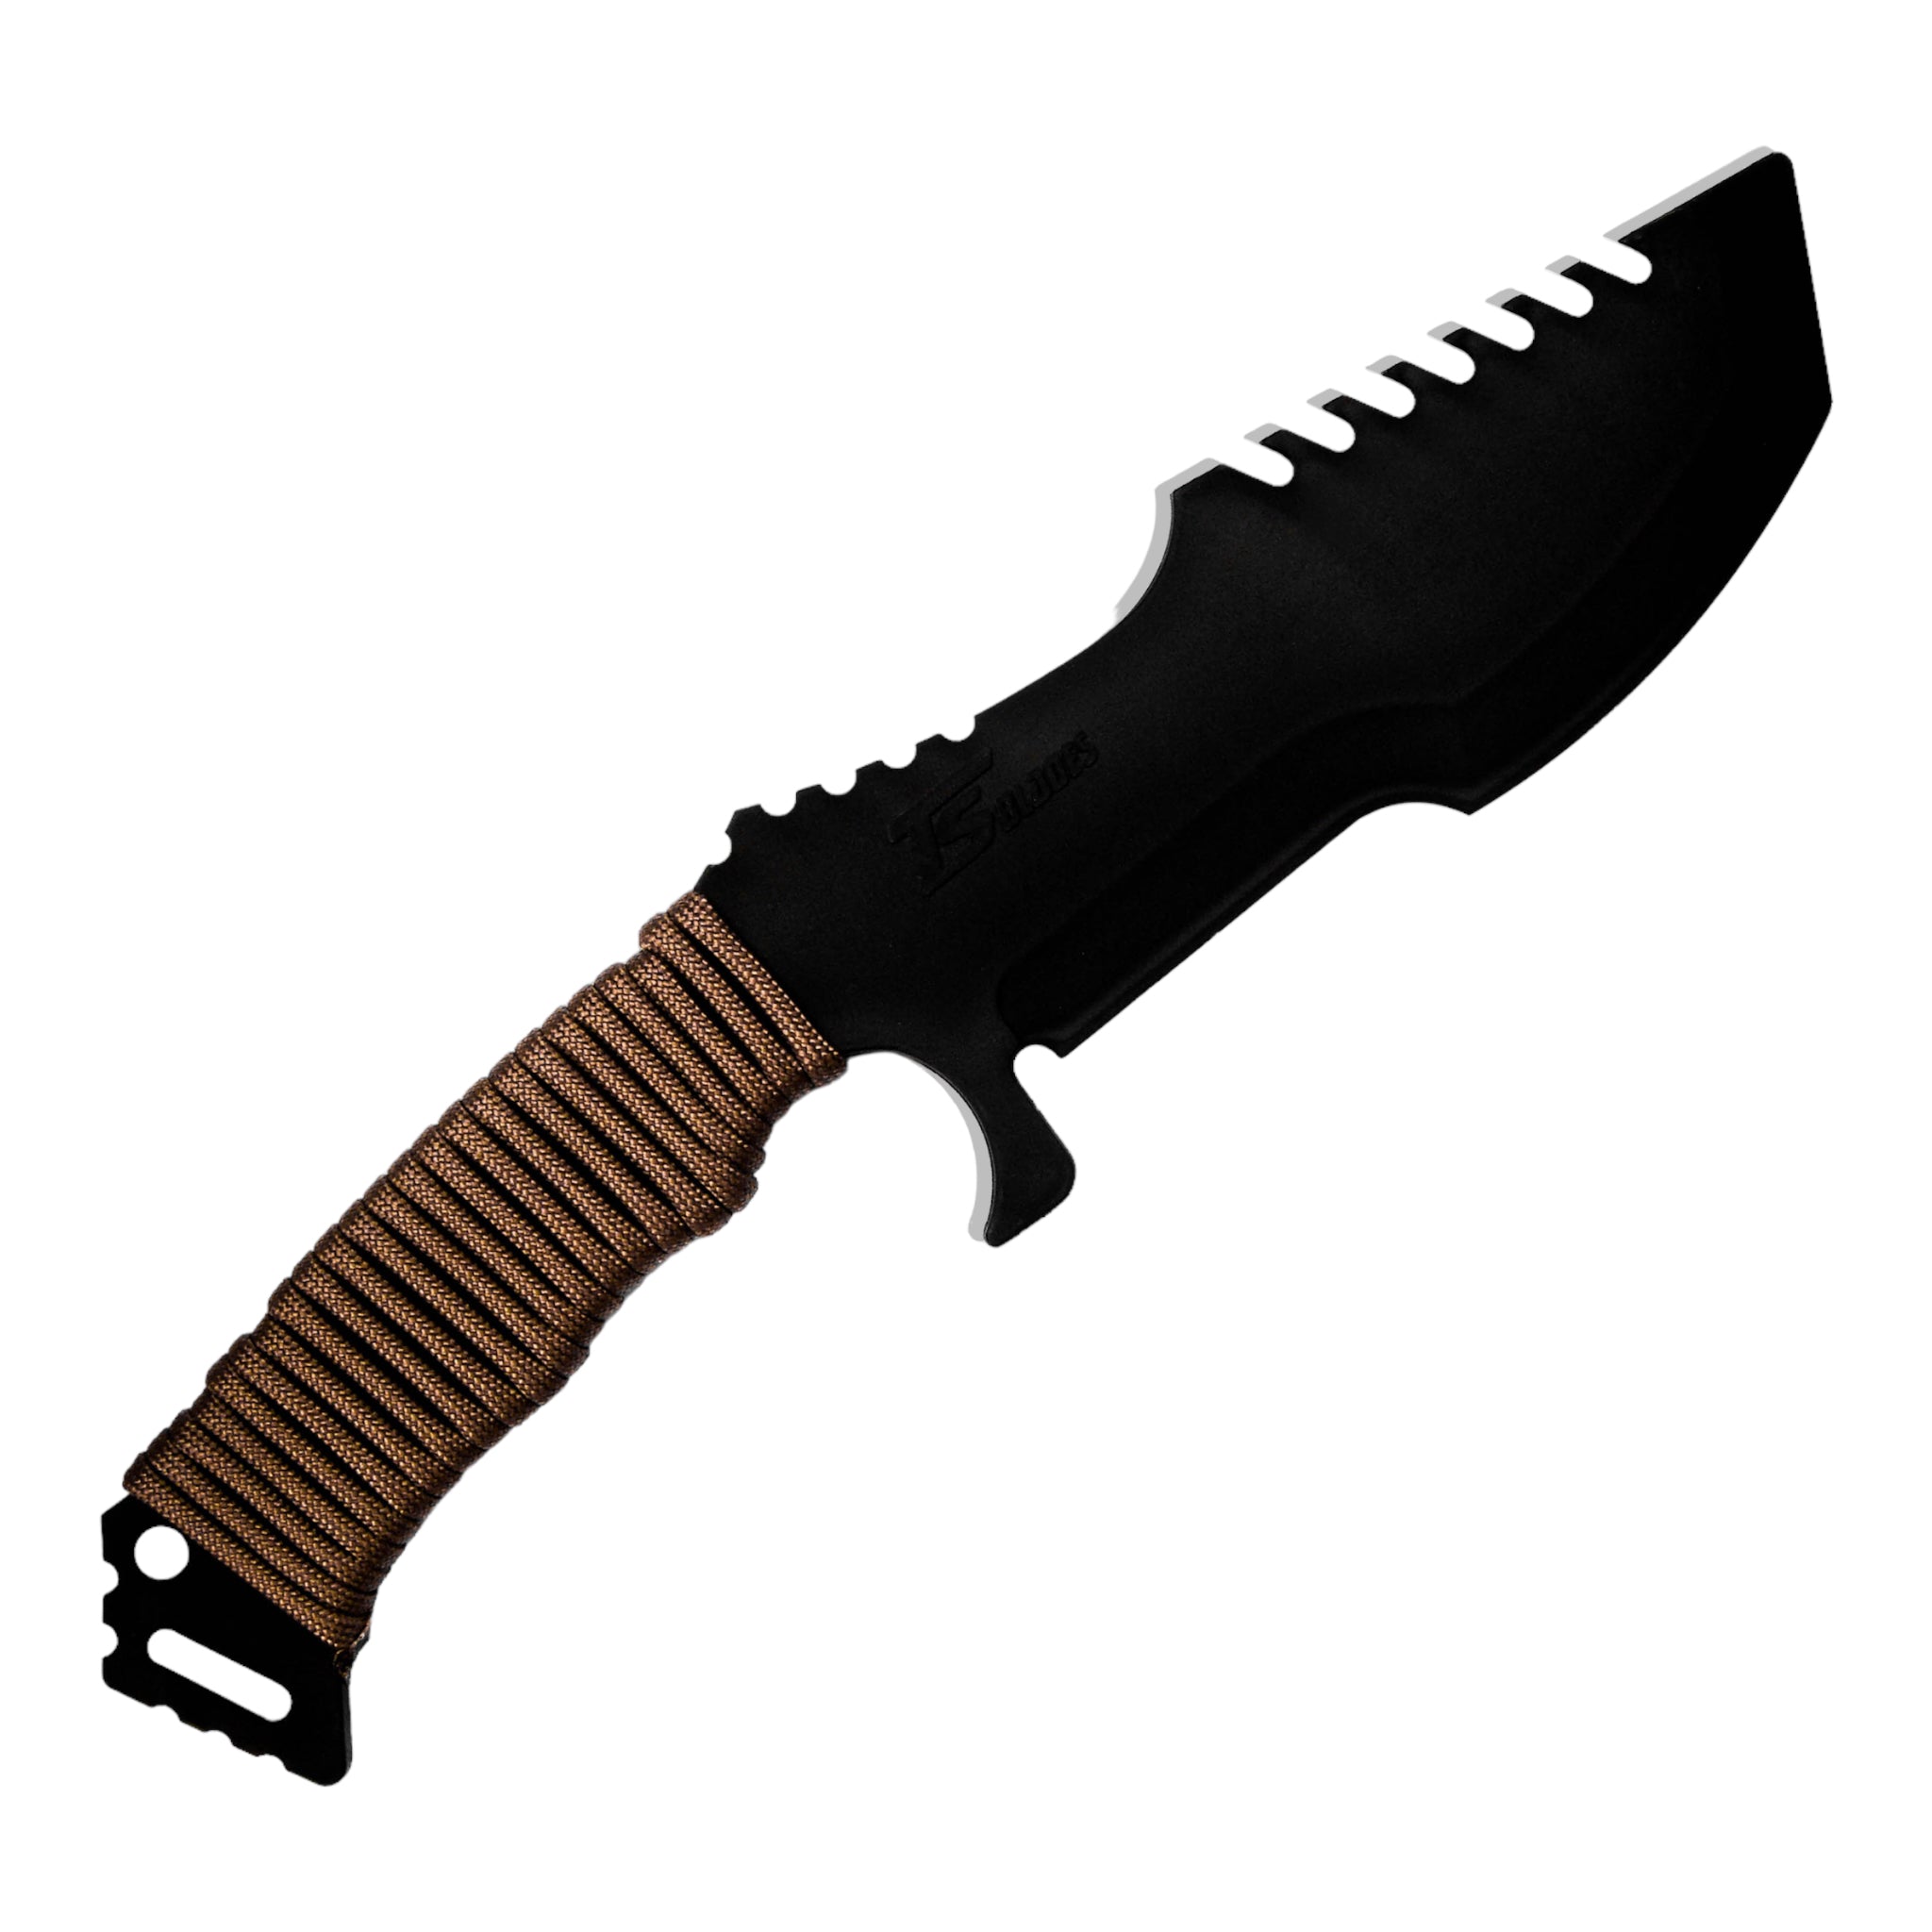 TS Blades Huntsman G3 Training Knife - ssairsoft